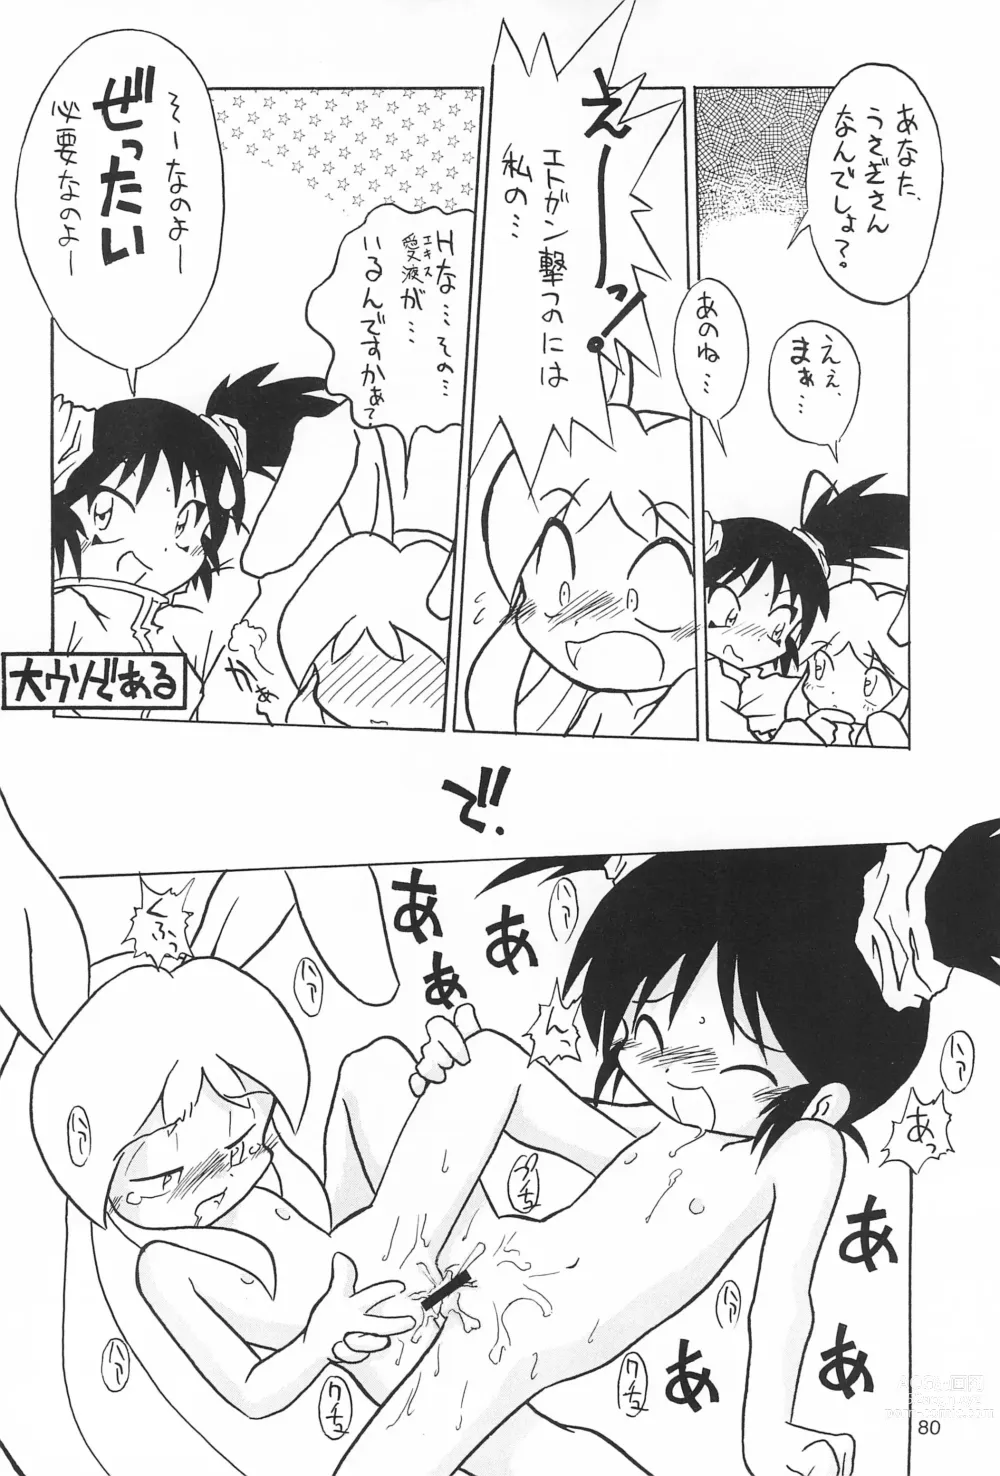 Page 80 of doujinshi Yonemaru Archive